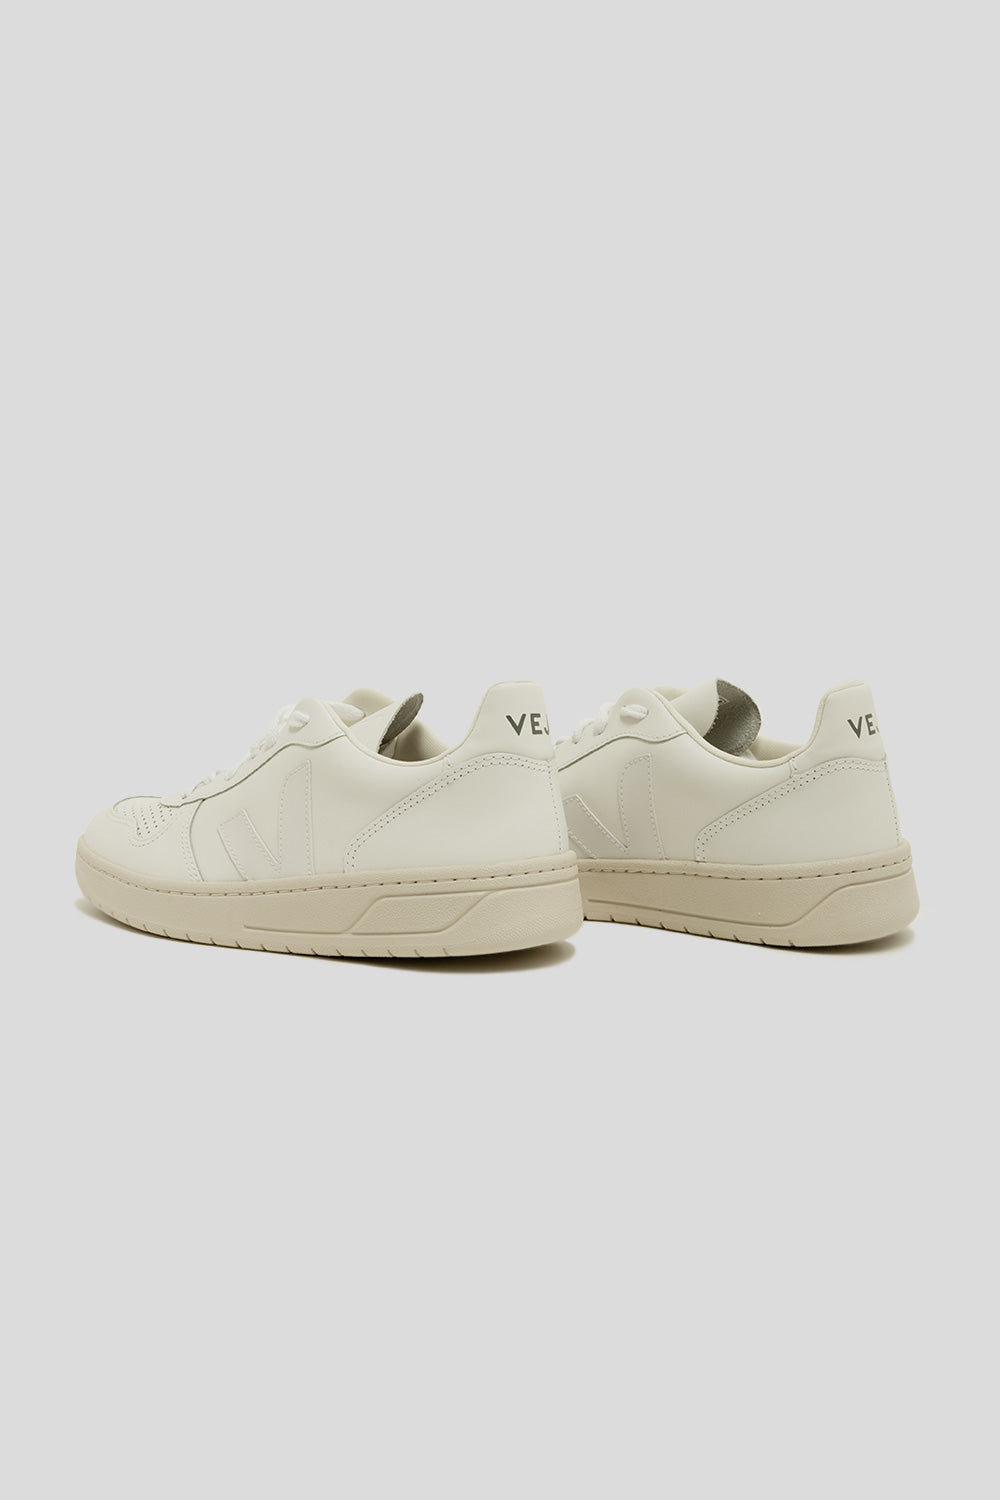 Veja Women's V-10 Leather Shoe in White/White